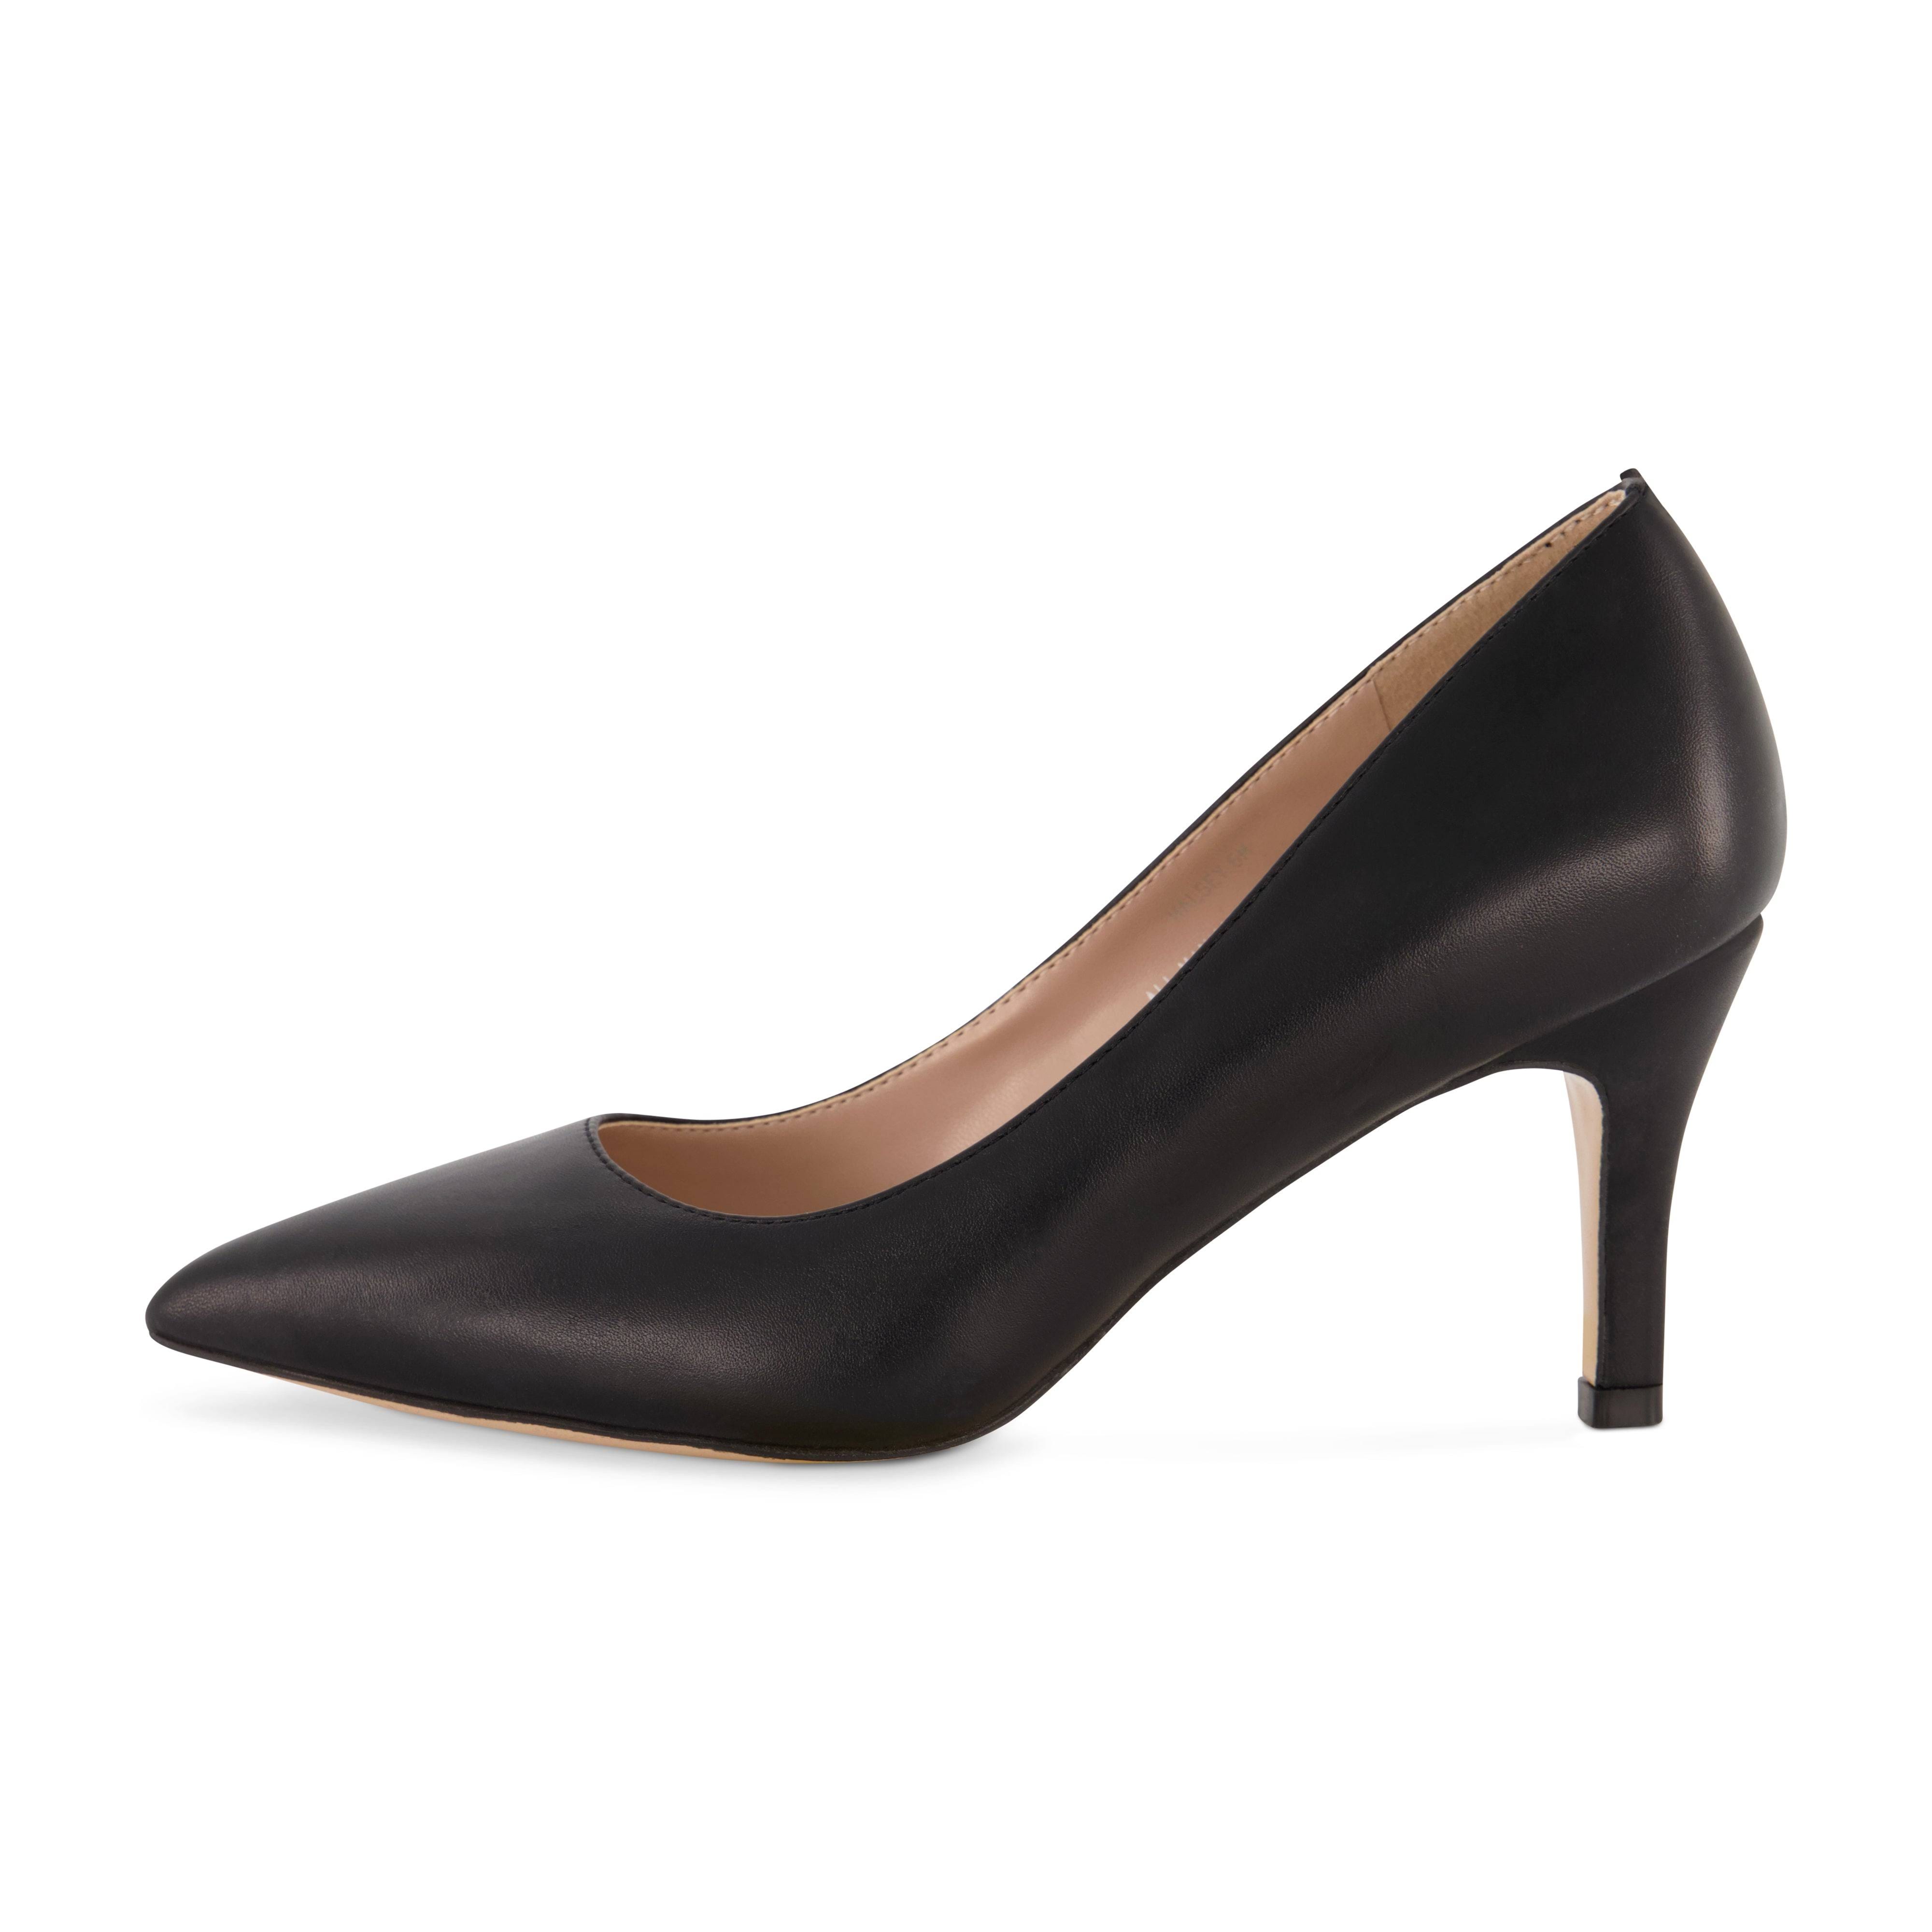 Luxurious Comfortable Black Heels for Women | Image